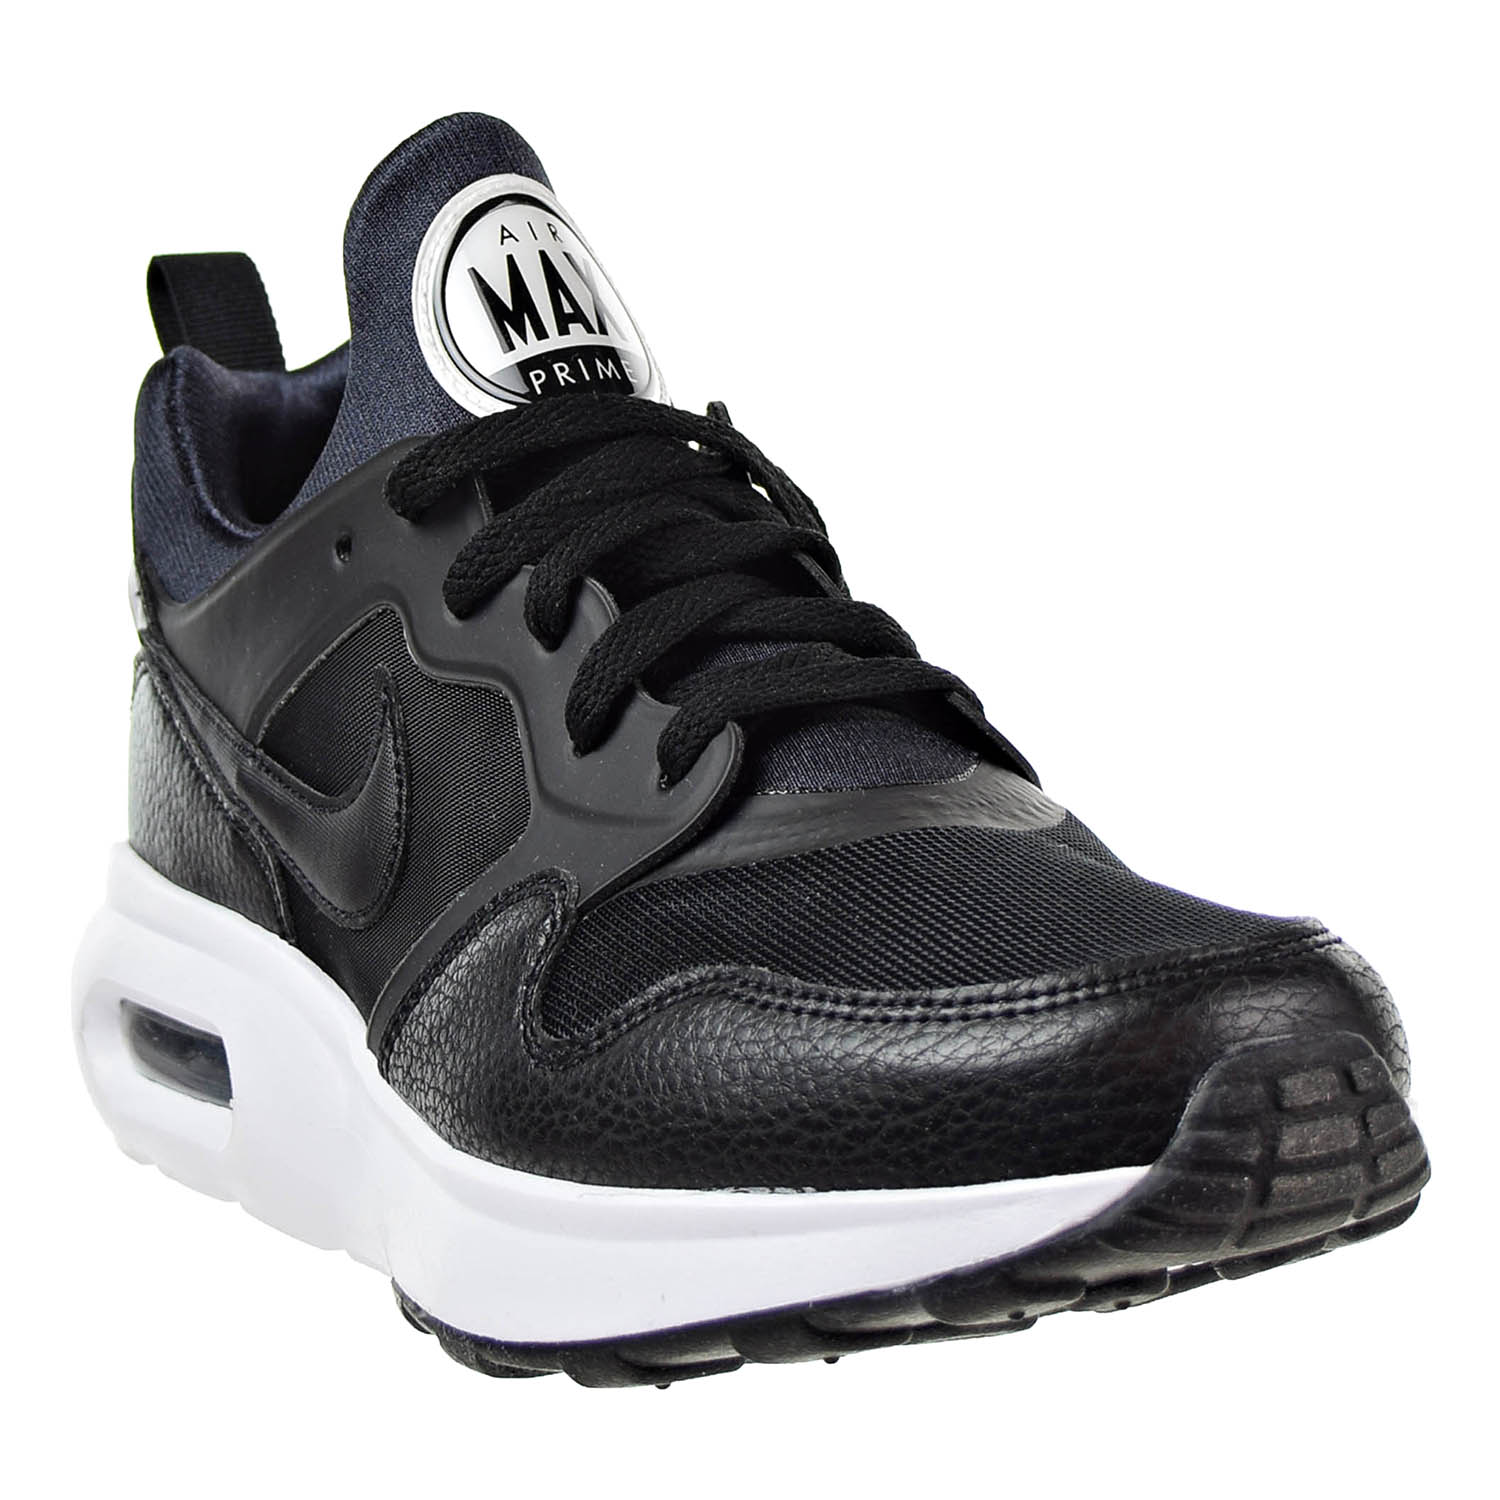 Wings Generosity credit Nike Air Max Prime Men's Running Shoes Black/Black-White 876068-001 (8 D(M)  US)